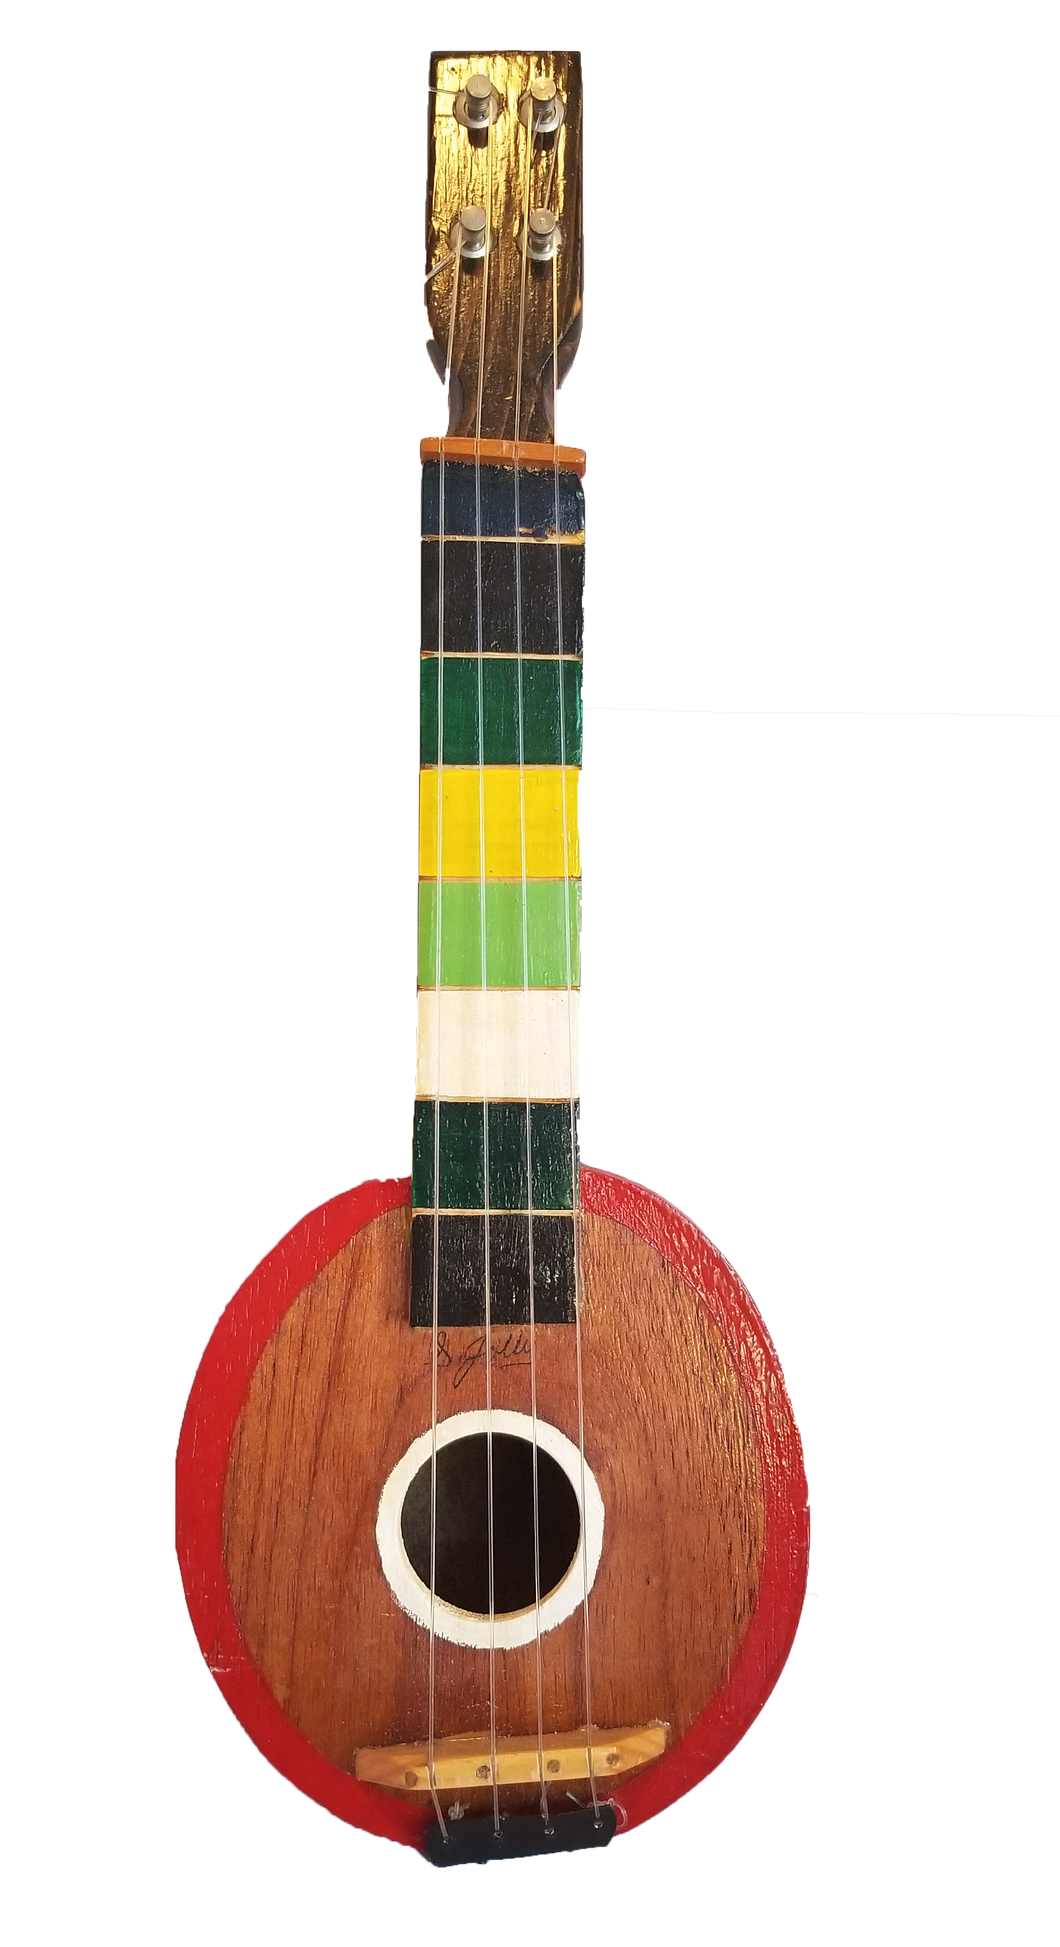 Color Guitar